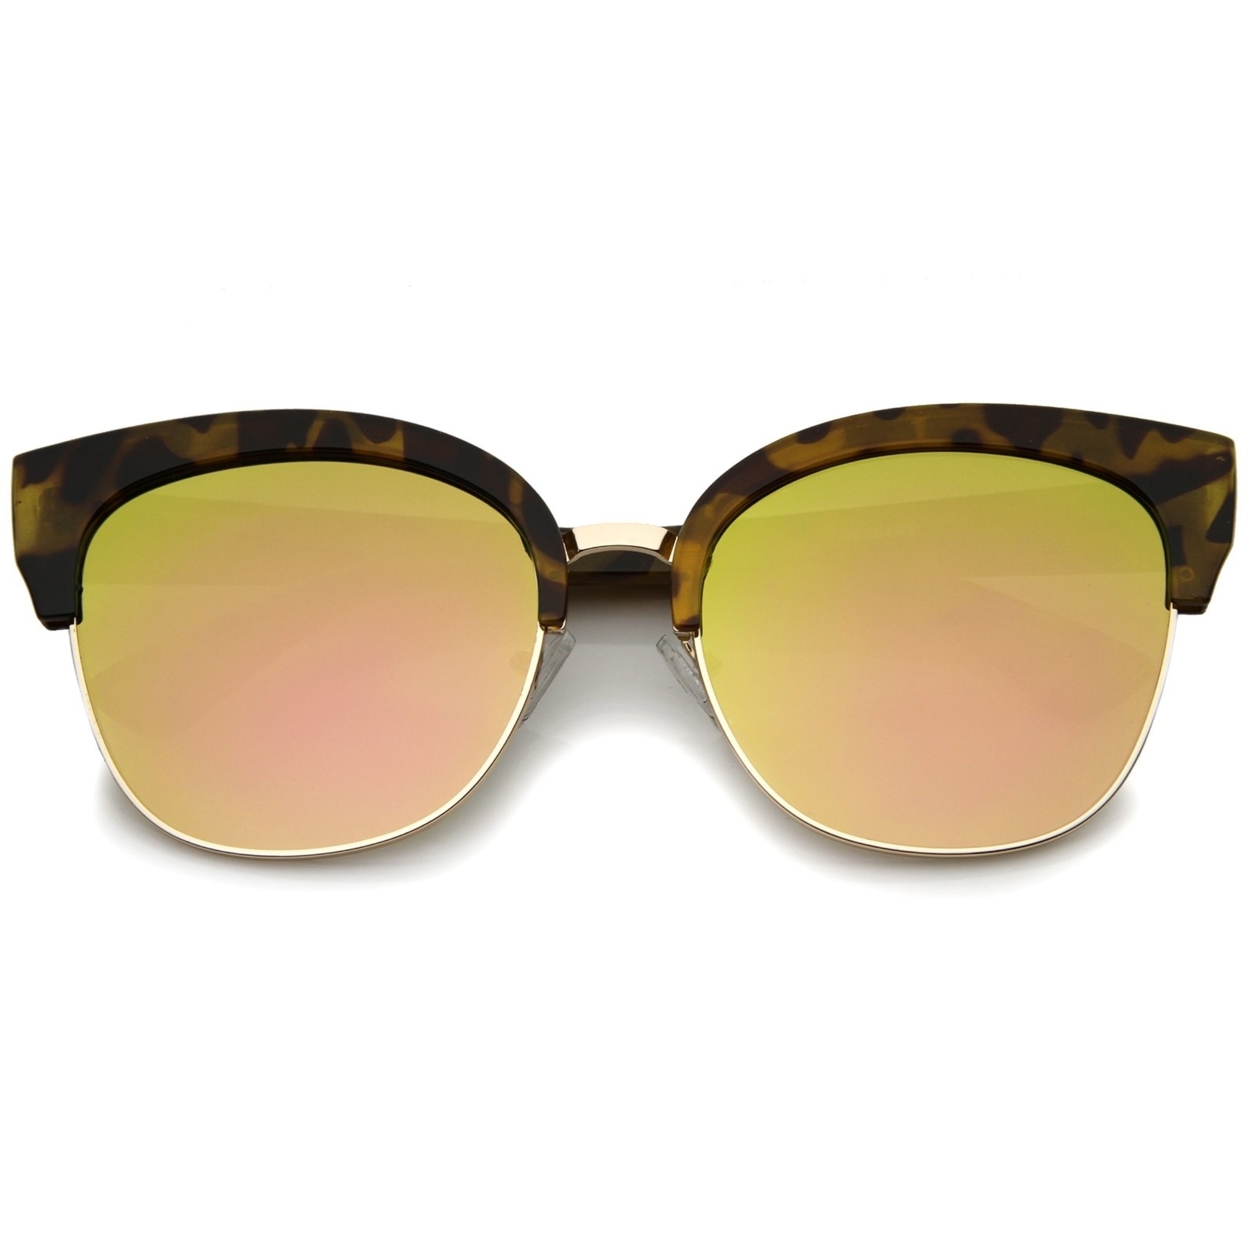 Modern Oversized Half-Frame Color Mirror Flat Lens Cat Eye Sunglasses 58mm - Black / Blue Mirror